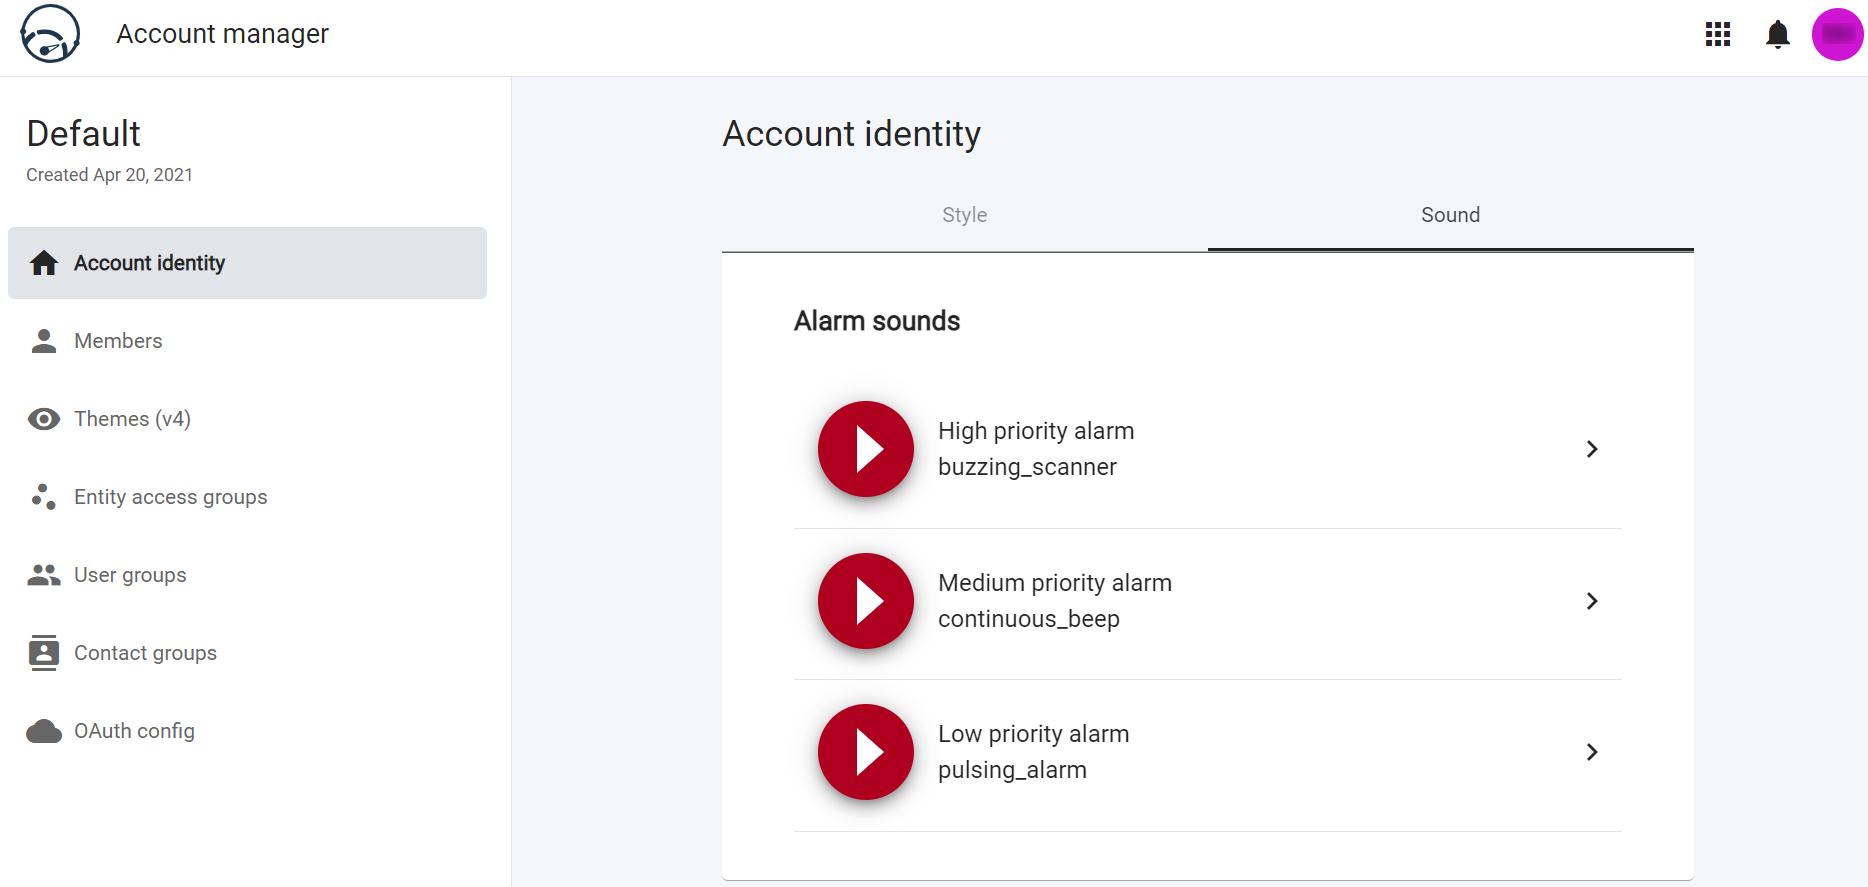 Account identity sounds